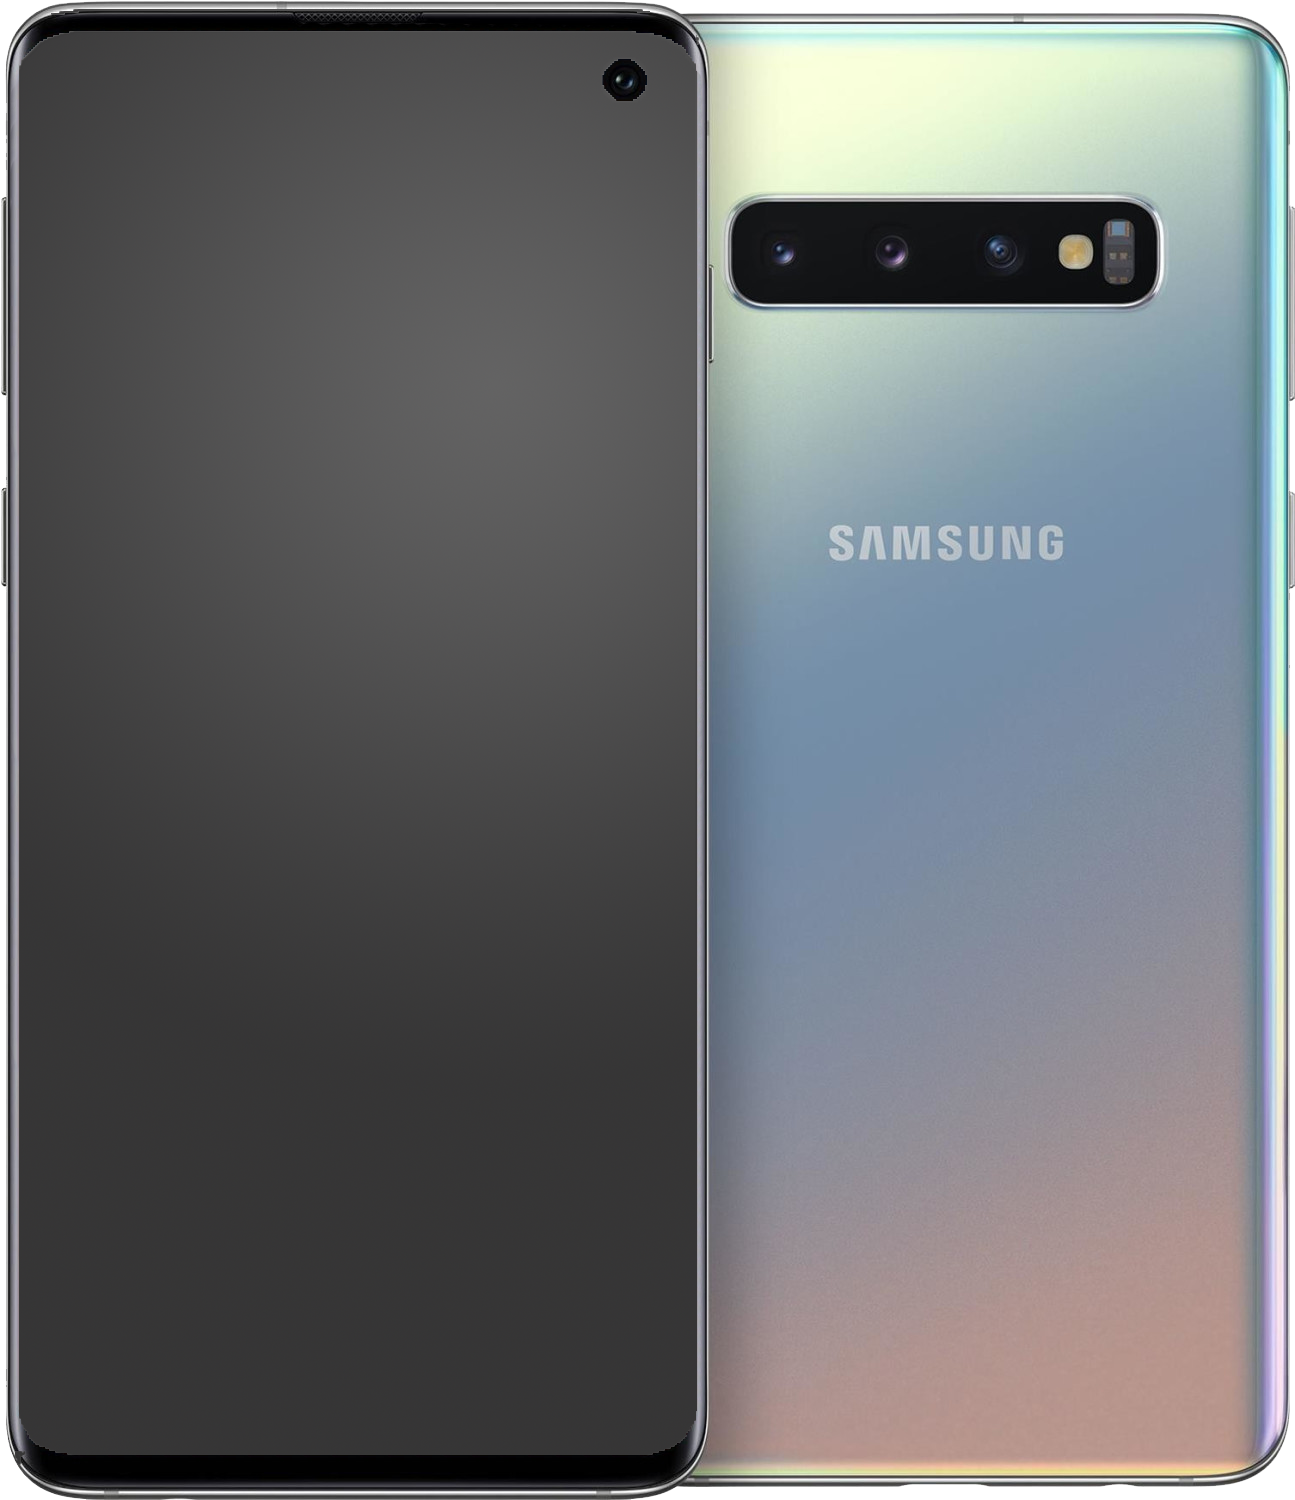 Samsung Galaxy S10 Dual-SIM sibler - Onhe Vertrag